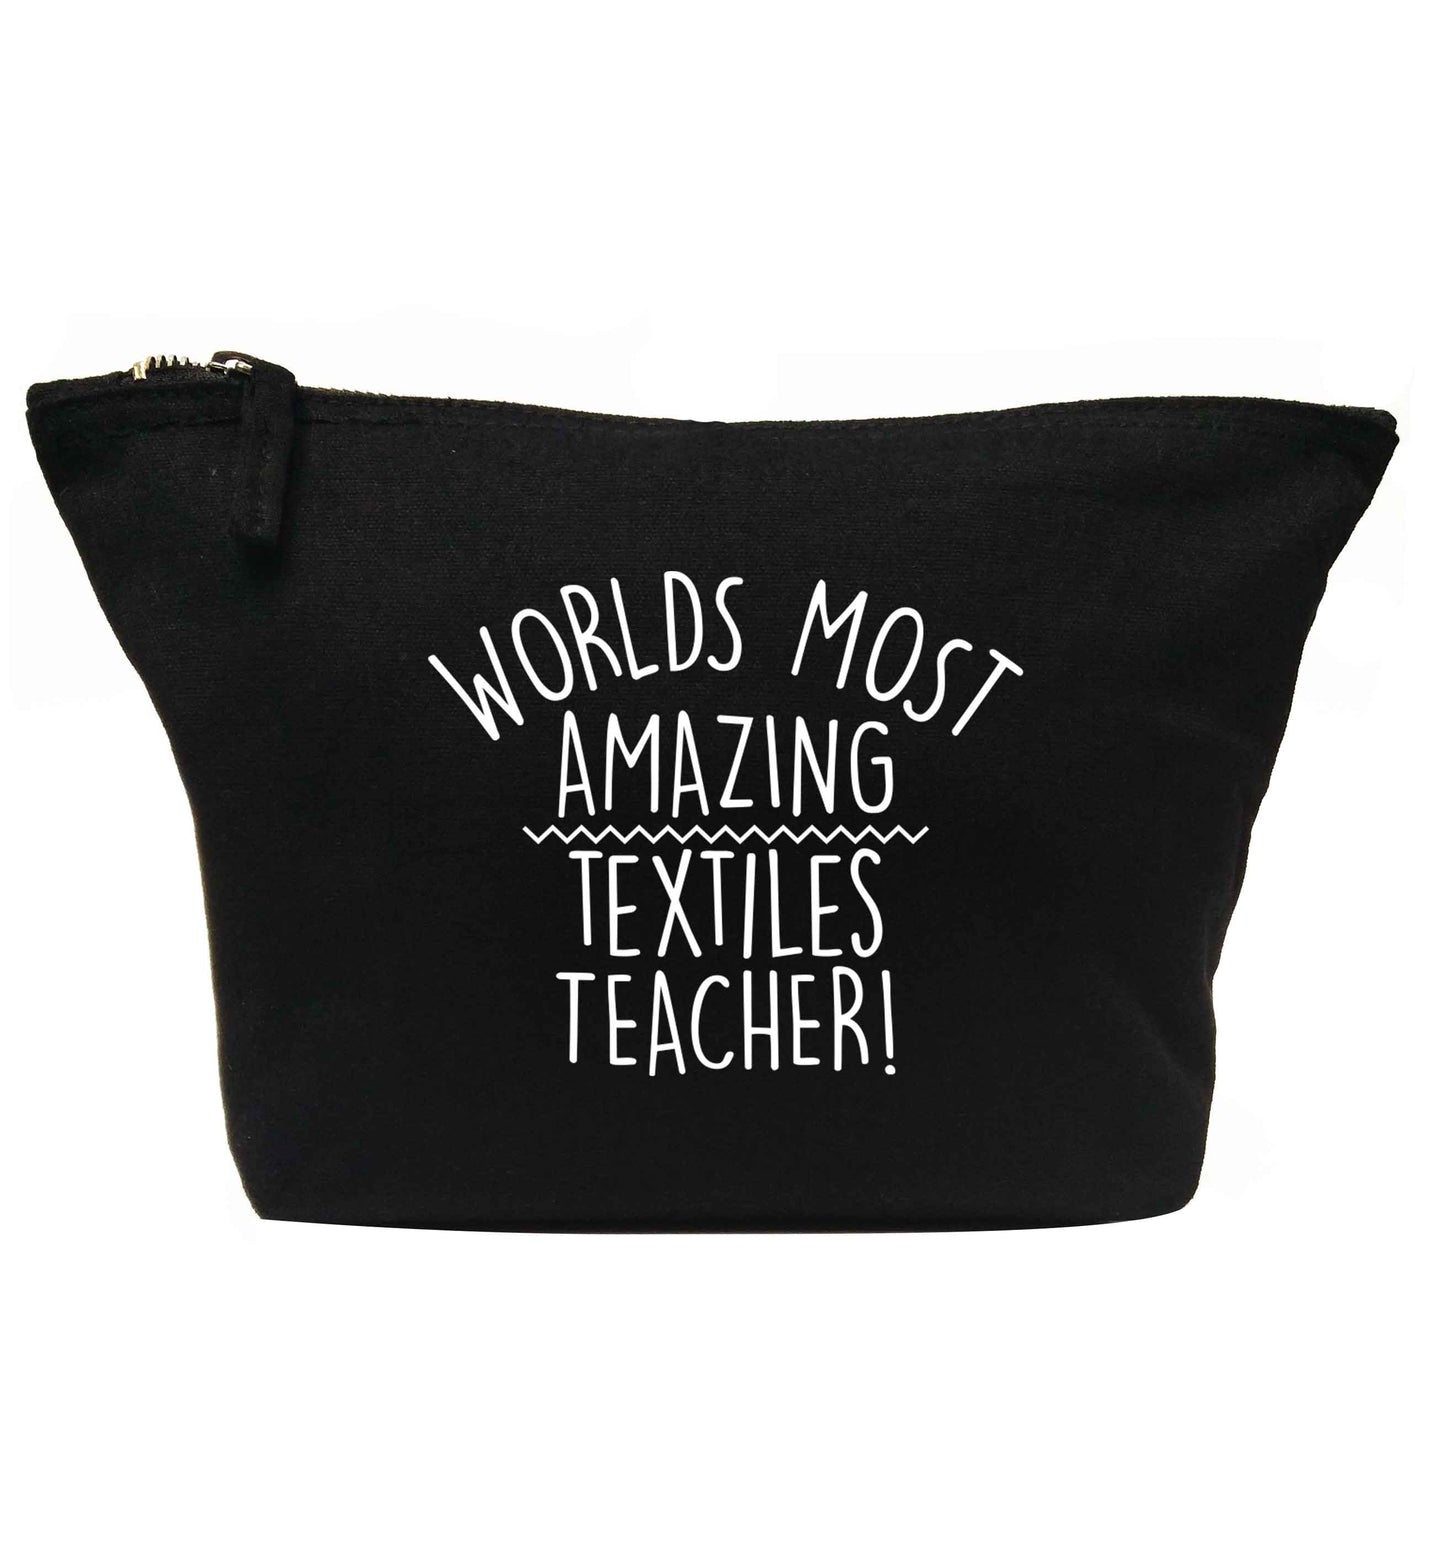 Worlds most amazing textiles teacher | Makeup / wash bag